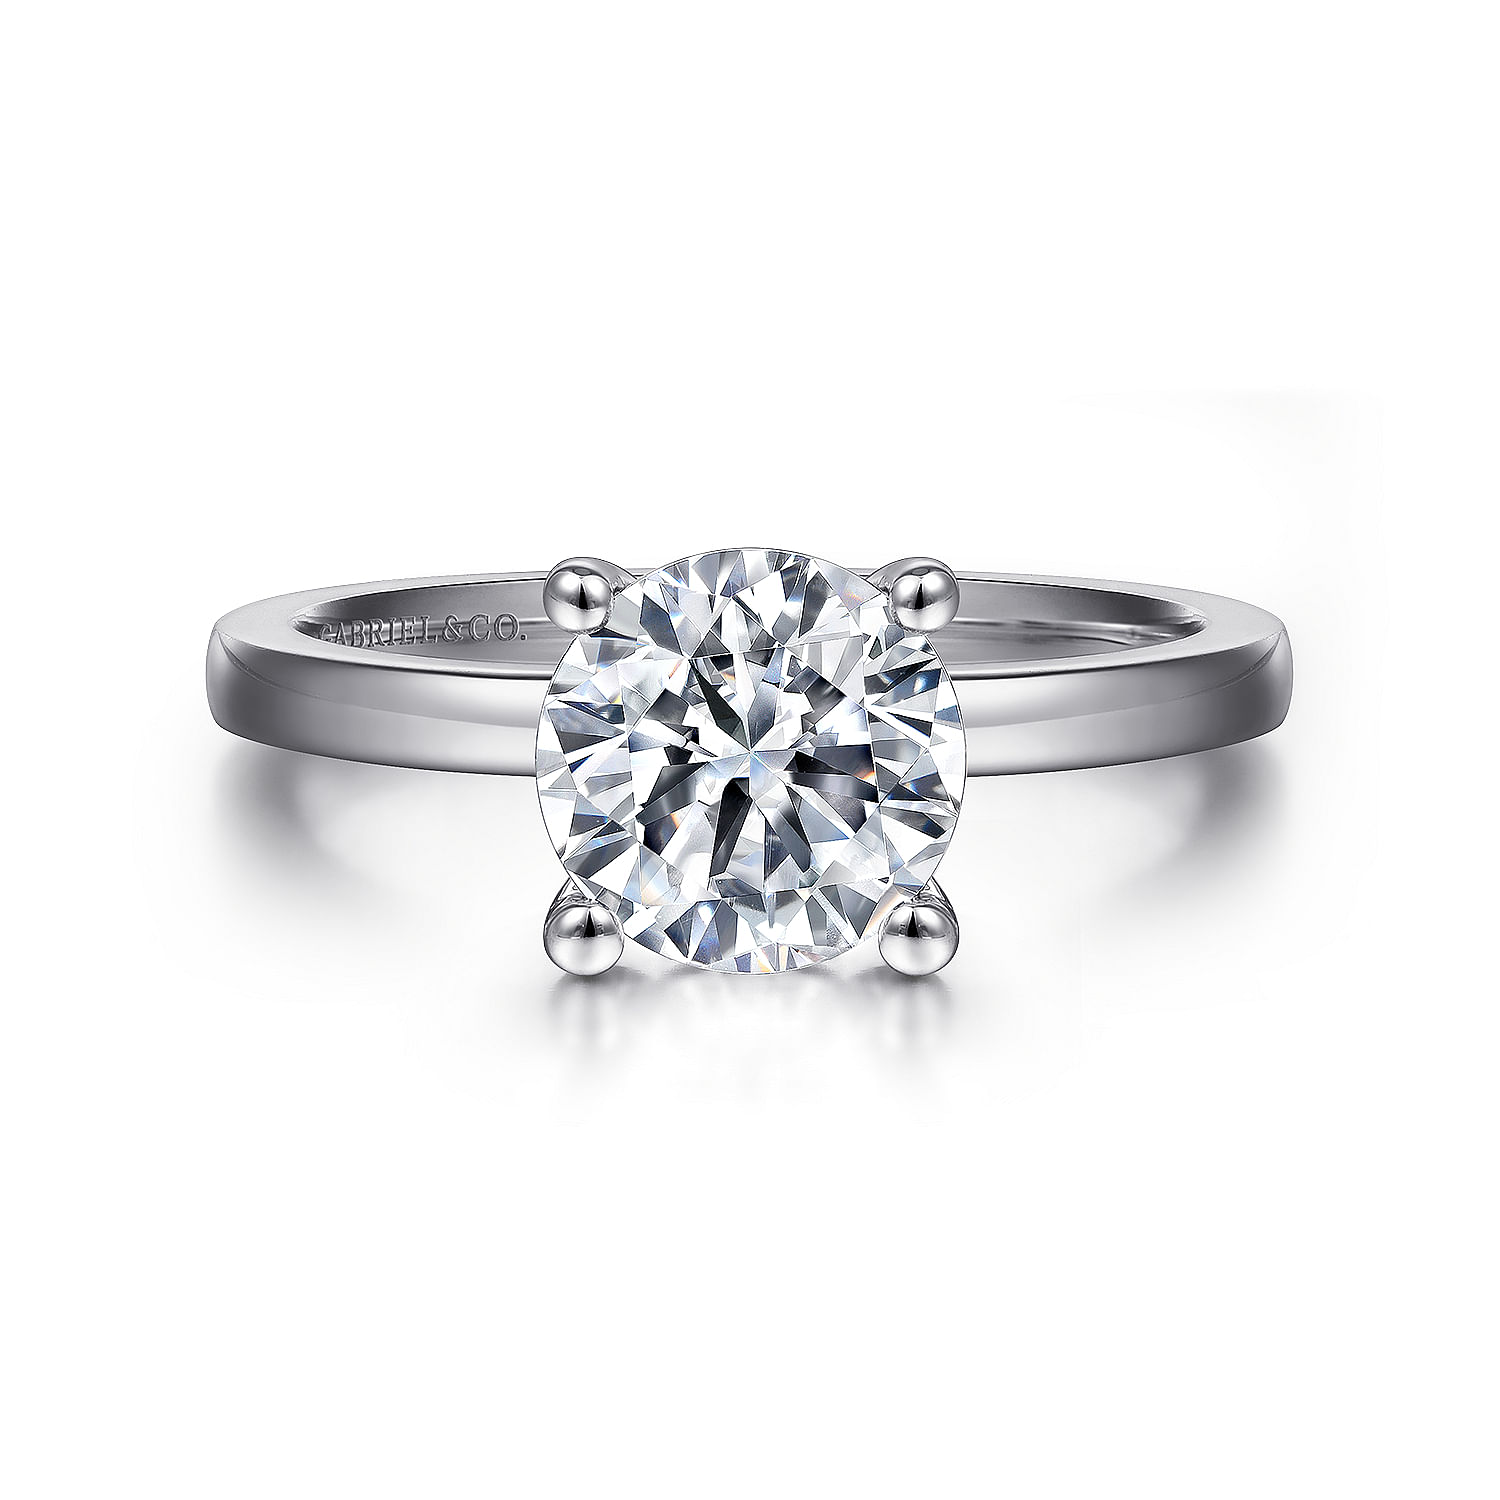 Paula - 14K White Gold Round Diamond Engagement Ring